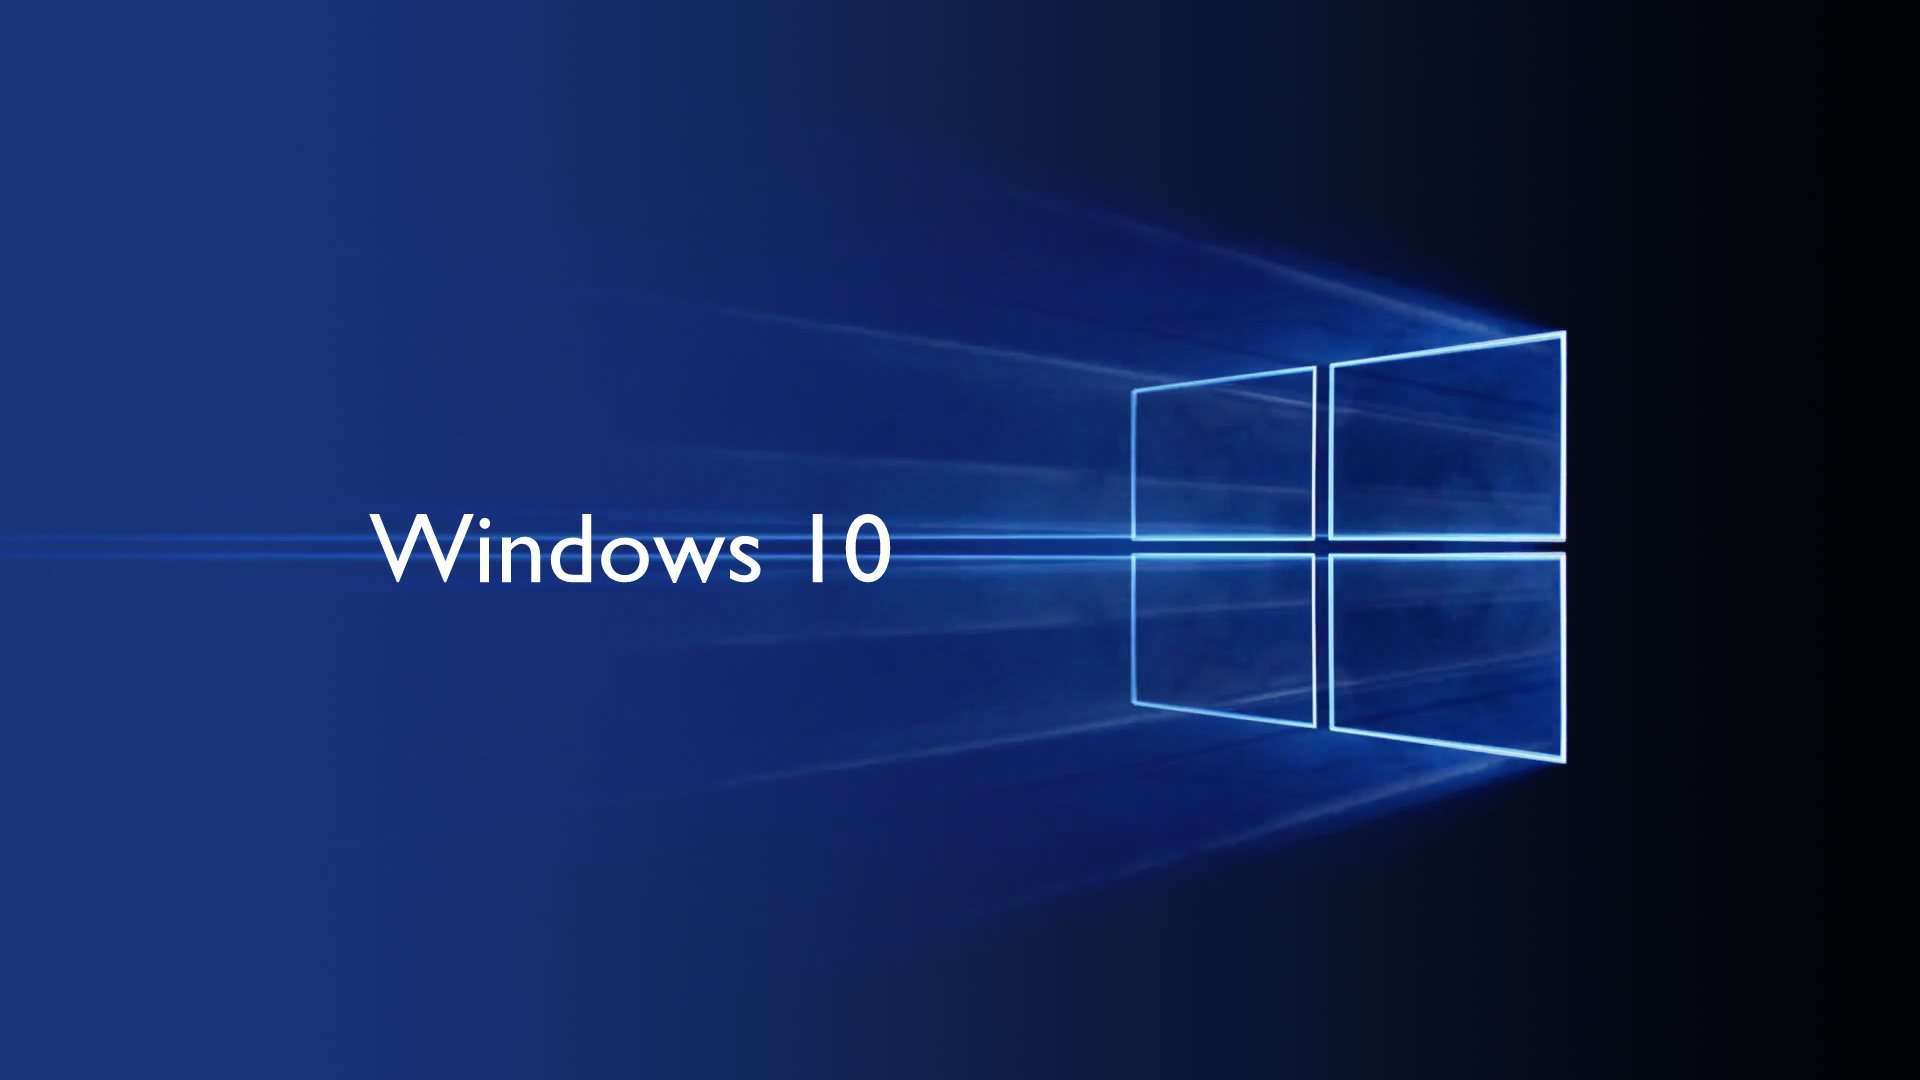 Wallpaper Windows 10 Hd Desktop 1080p Upload at August 1 2015 by 1920x1080